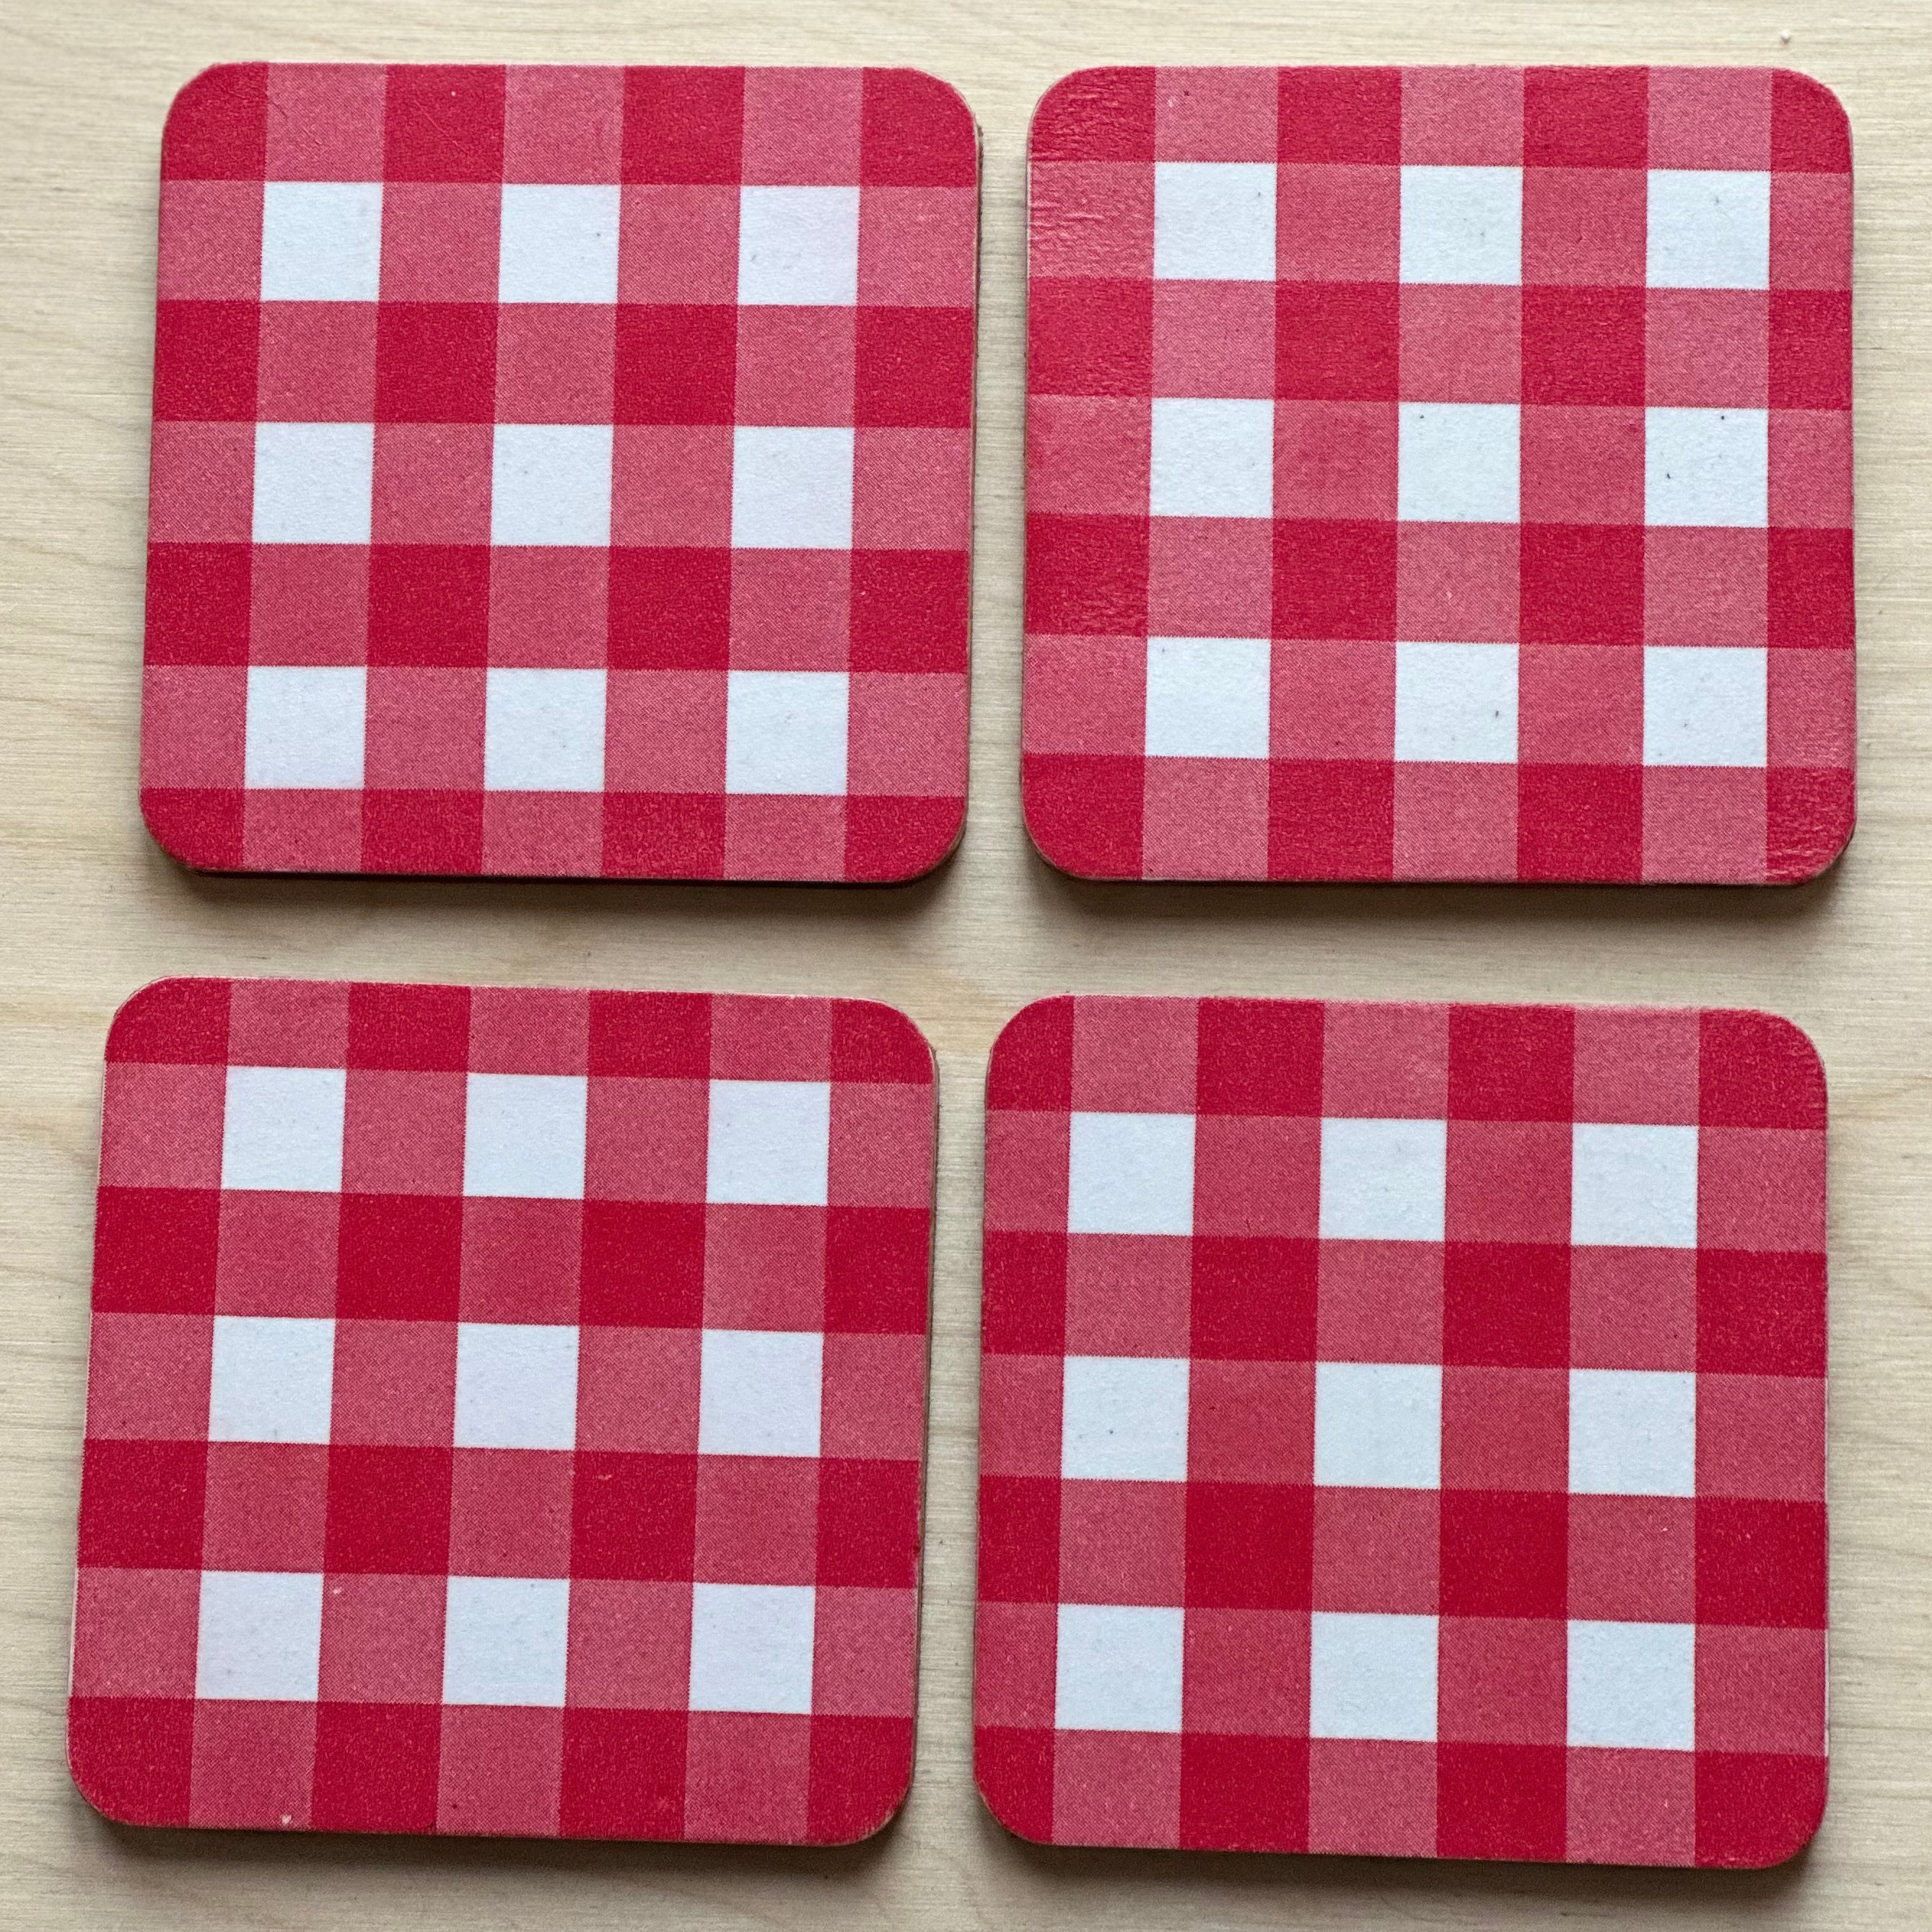 Wood Coasters - Set of 4